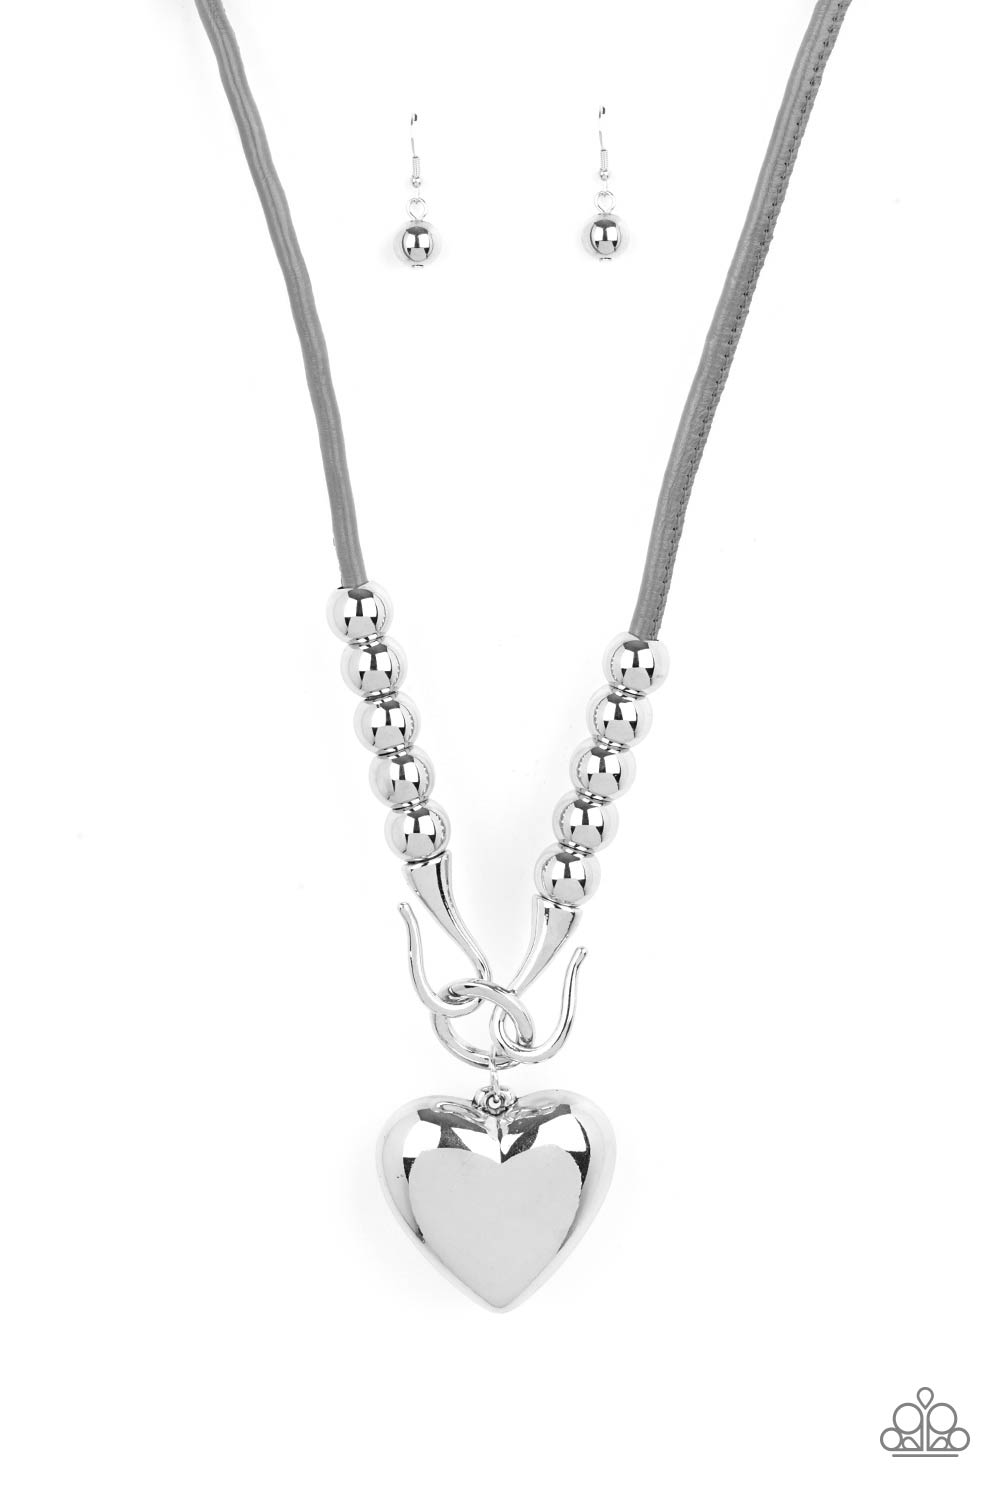 Forbidden Love Silver-Necklace